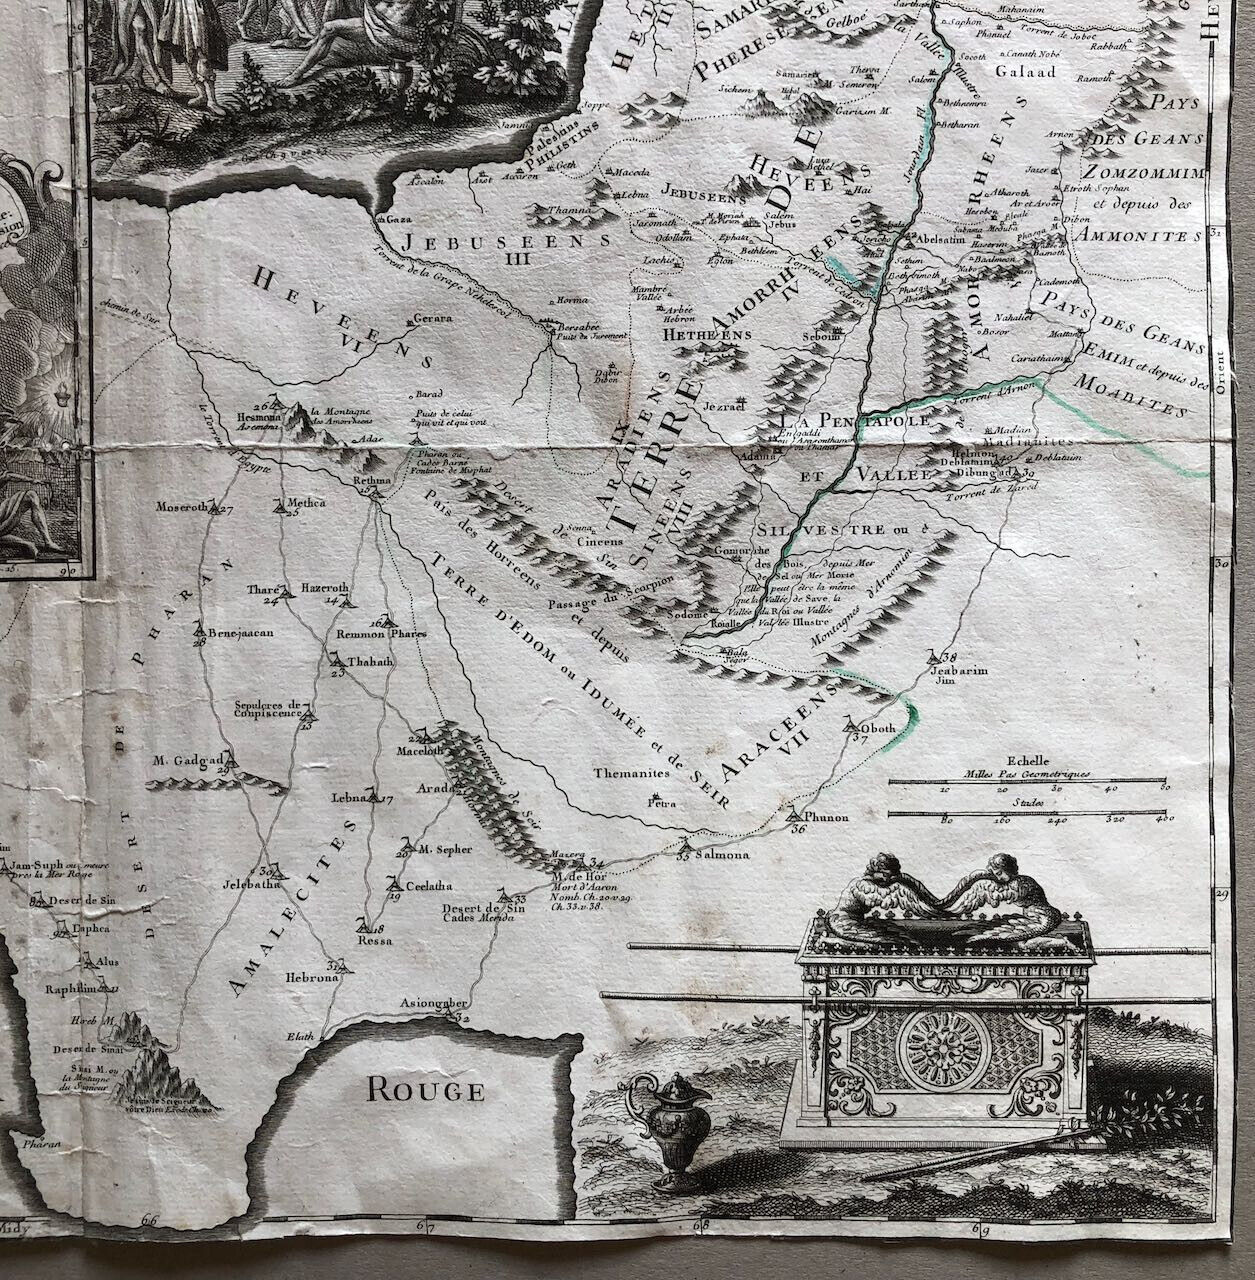 Robert — Terre de Chanaan [Israel - Palestine] — eau-forte — 42 x 55 cm. — 1743.